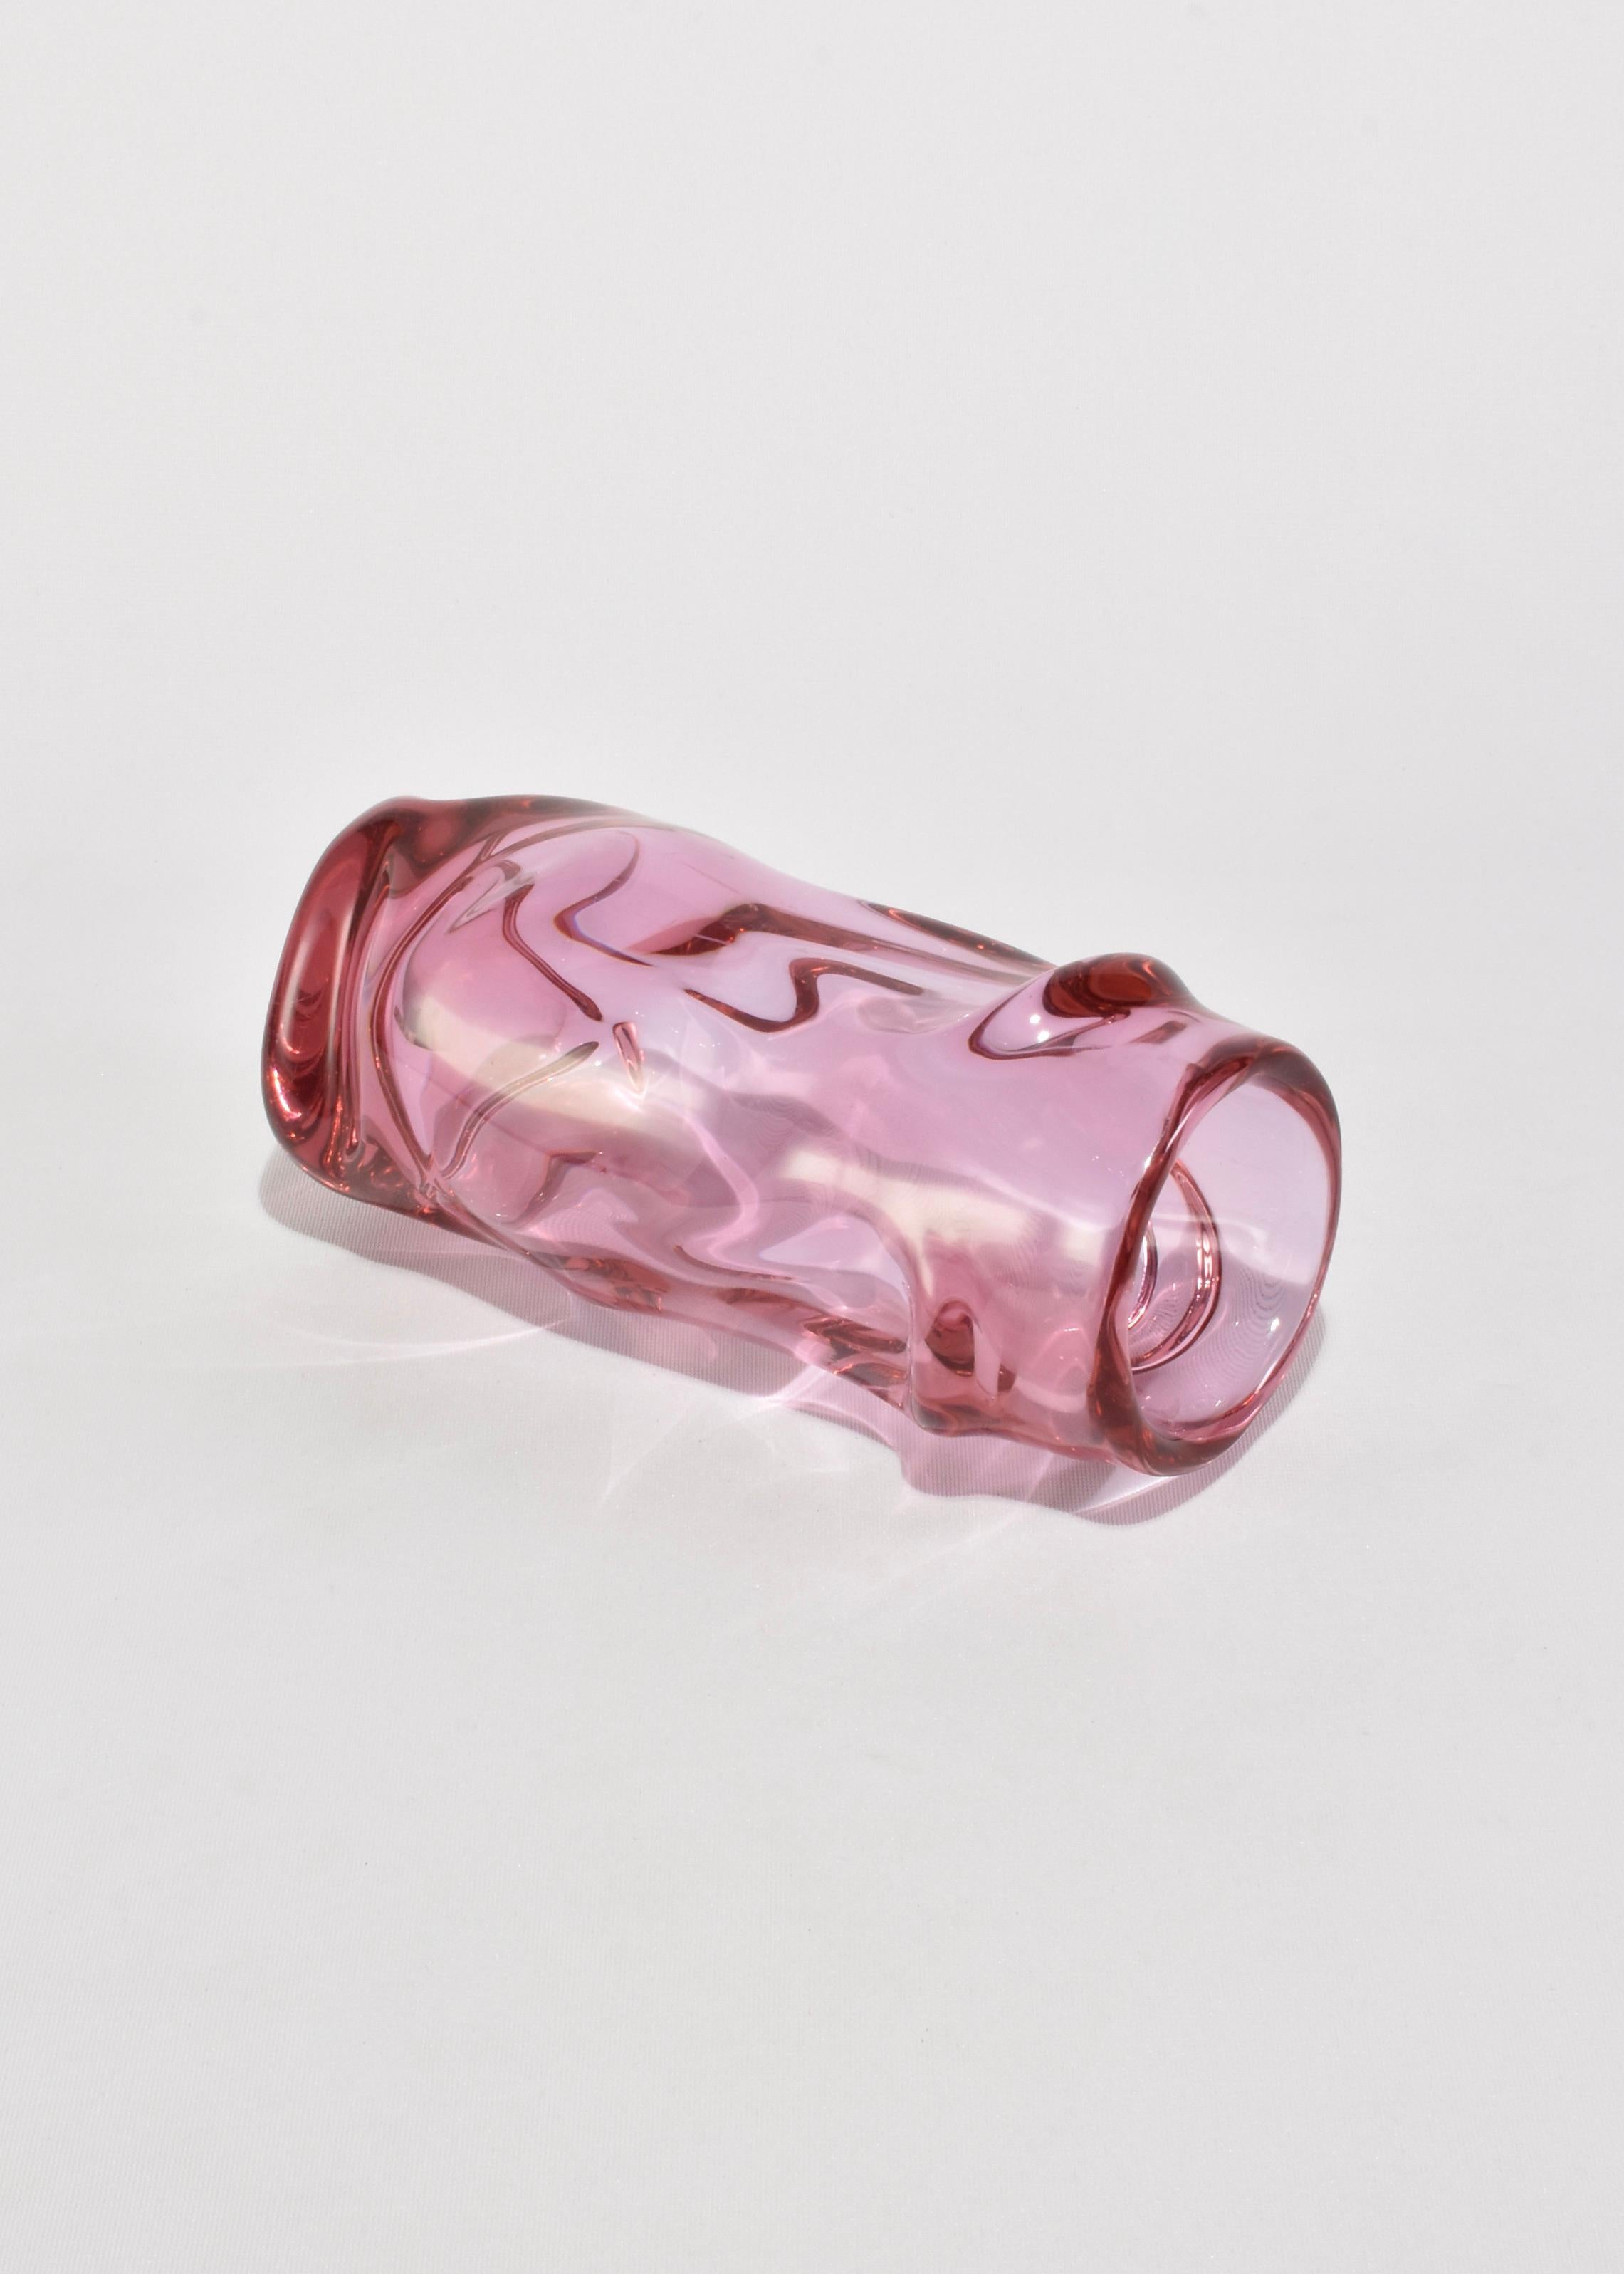 Mid-20th Century Pink Glass Vase